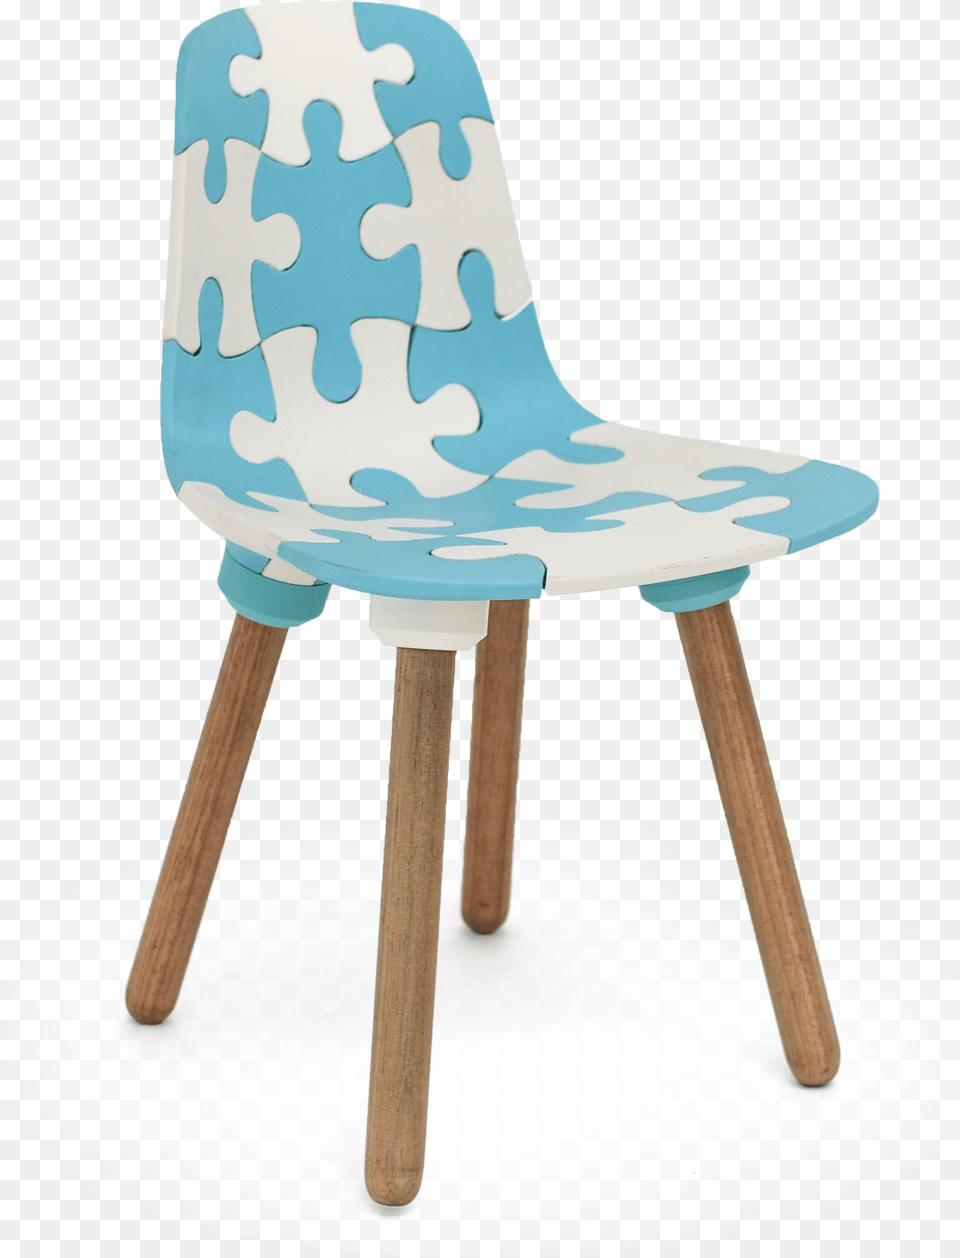 Kwc Trans Joris Laarman Puzzle Chair, Furniture, Plywood, Wood Png